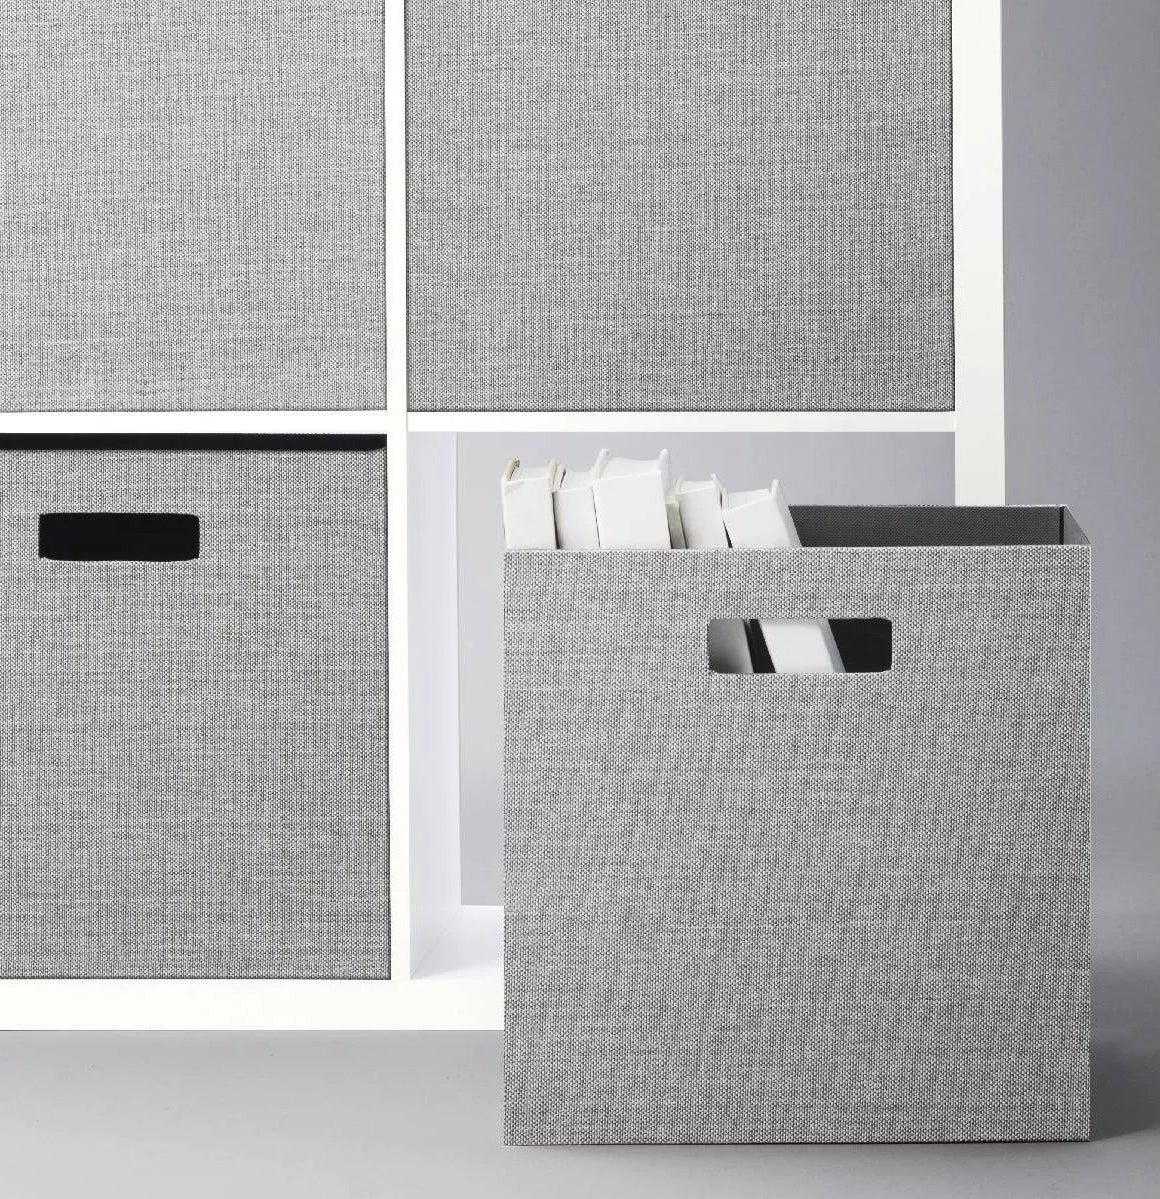 The gray-linen storage cube